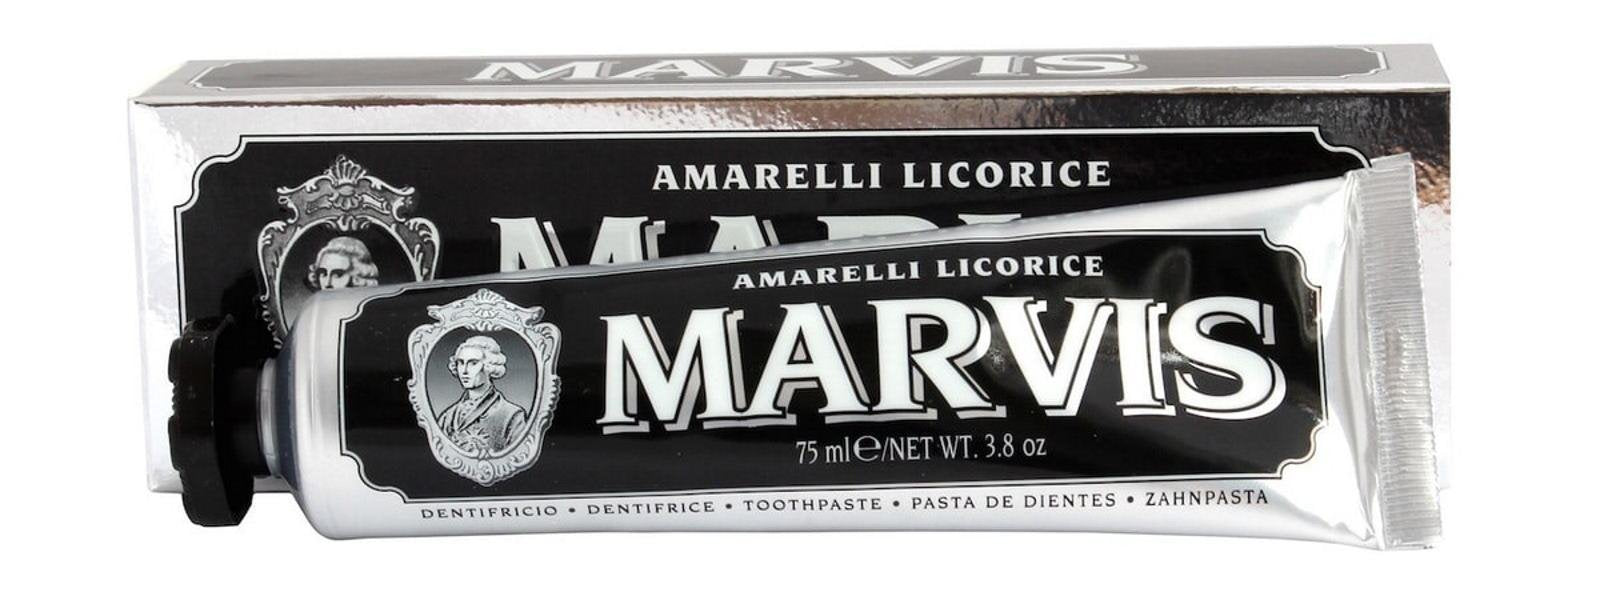 Presenting Marvis Amarelli Liquorice Toothpaste-News